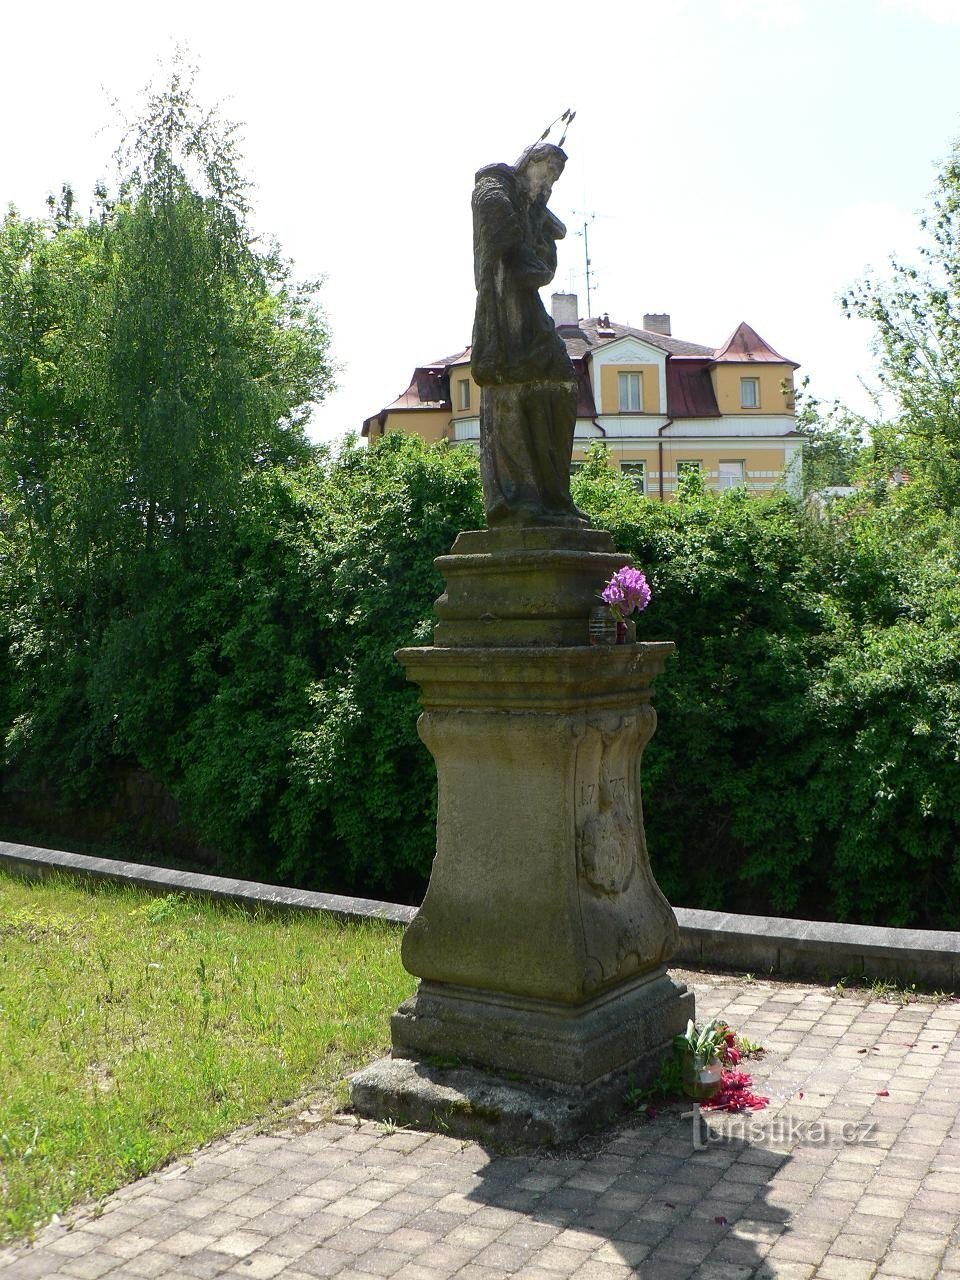 Františkovy Lázně、聖母の像。 ネポムクのヨハネ